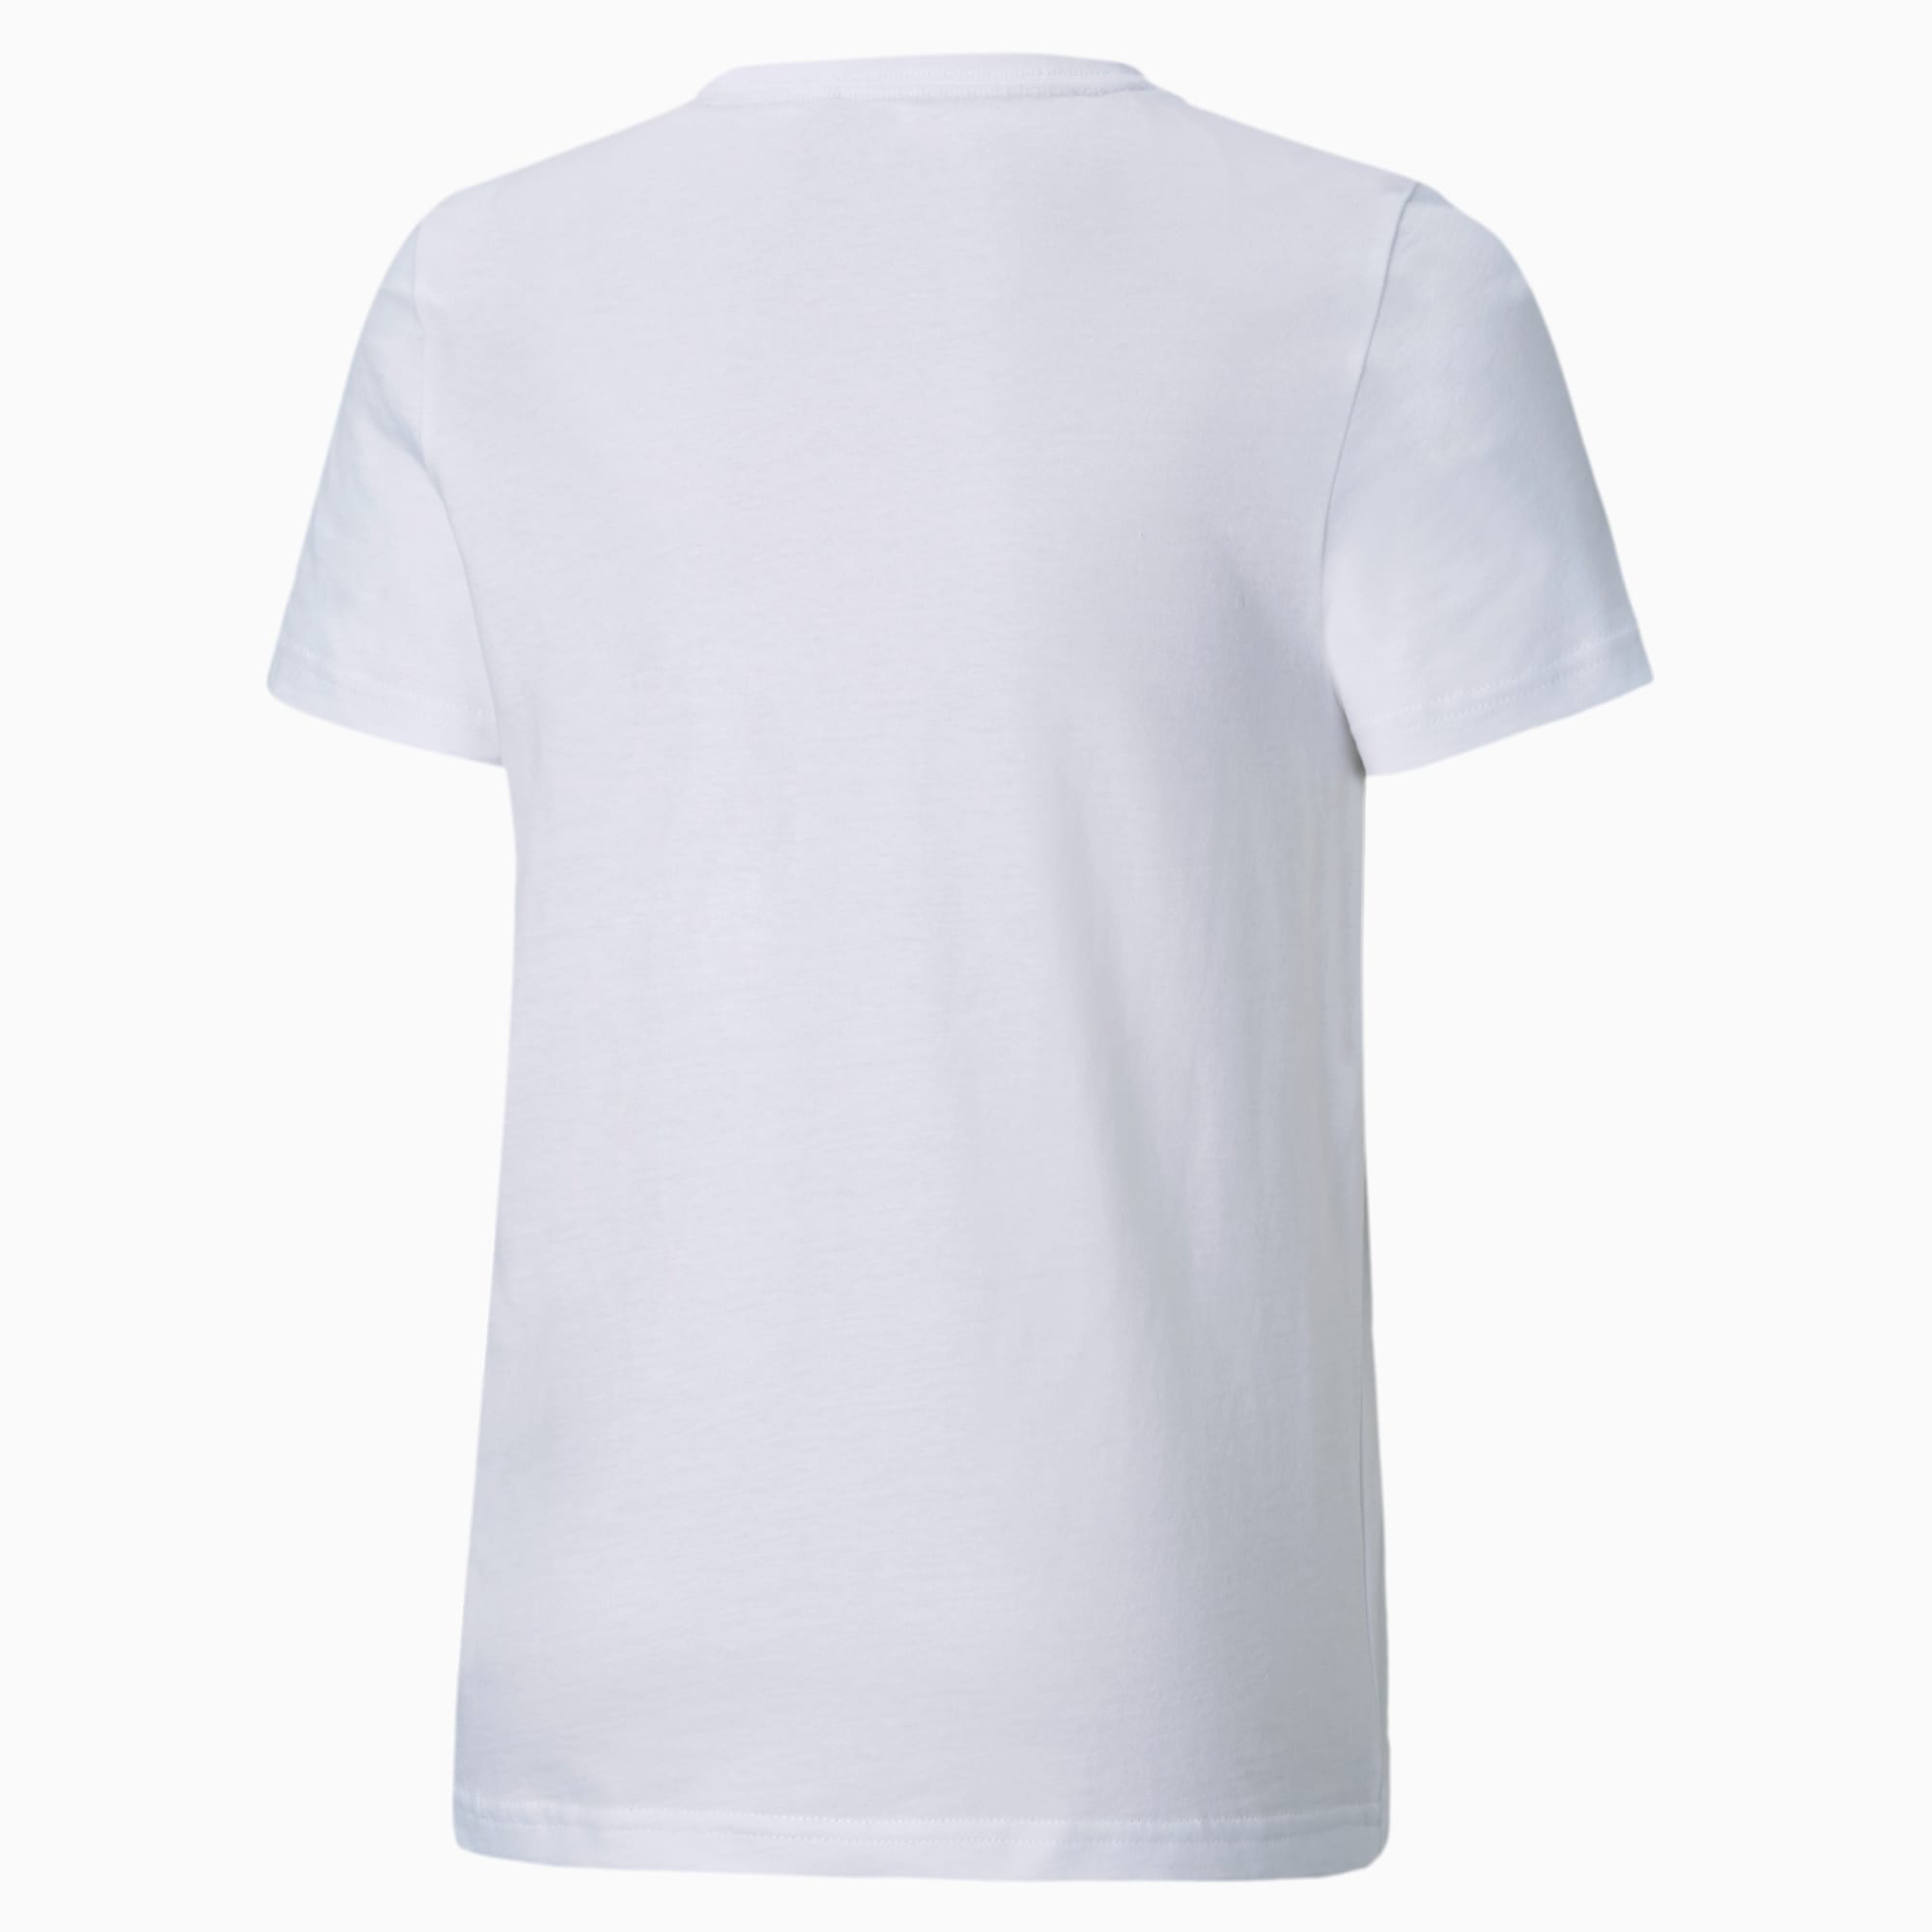 PUMA Essentials Logo Youth T-Shirt, White, Size 92, Clothing